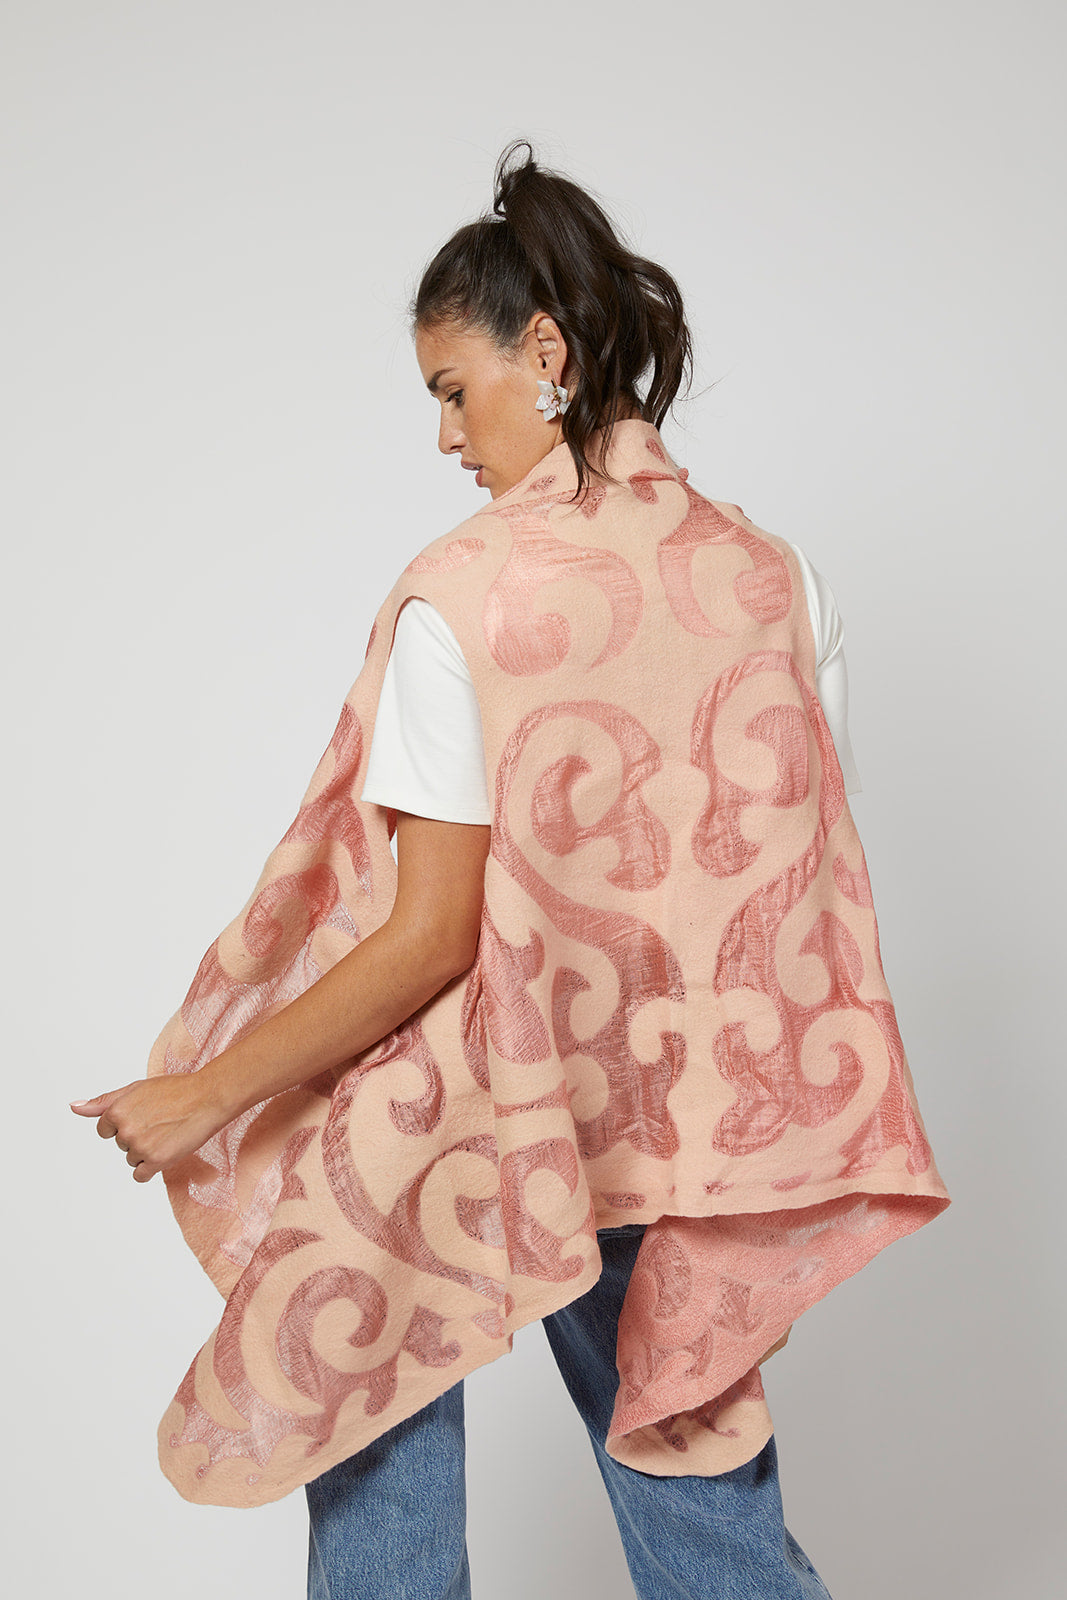 Felted Wool Duster Vest from Kyrgyzstan - Blush Pink by Larkin Lane